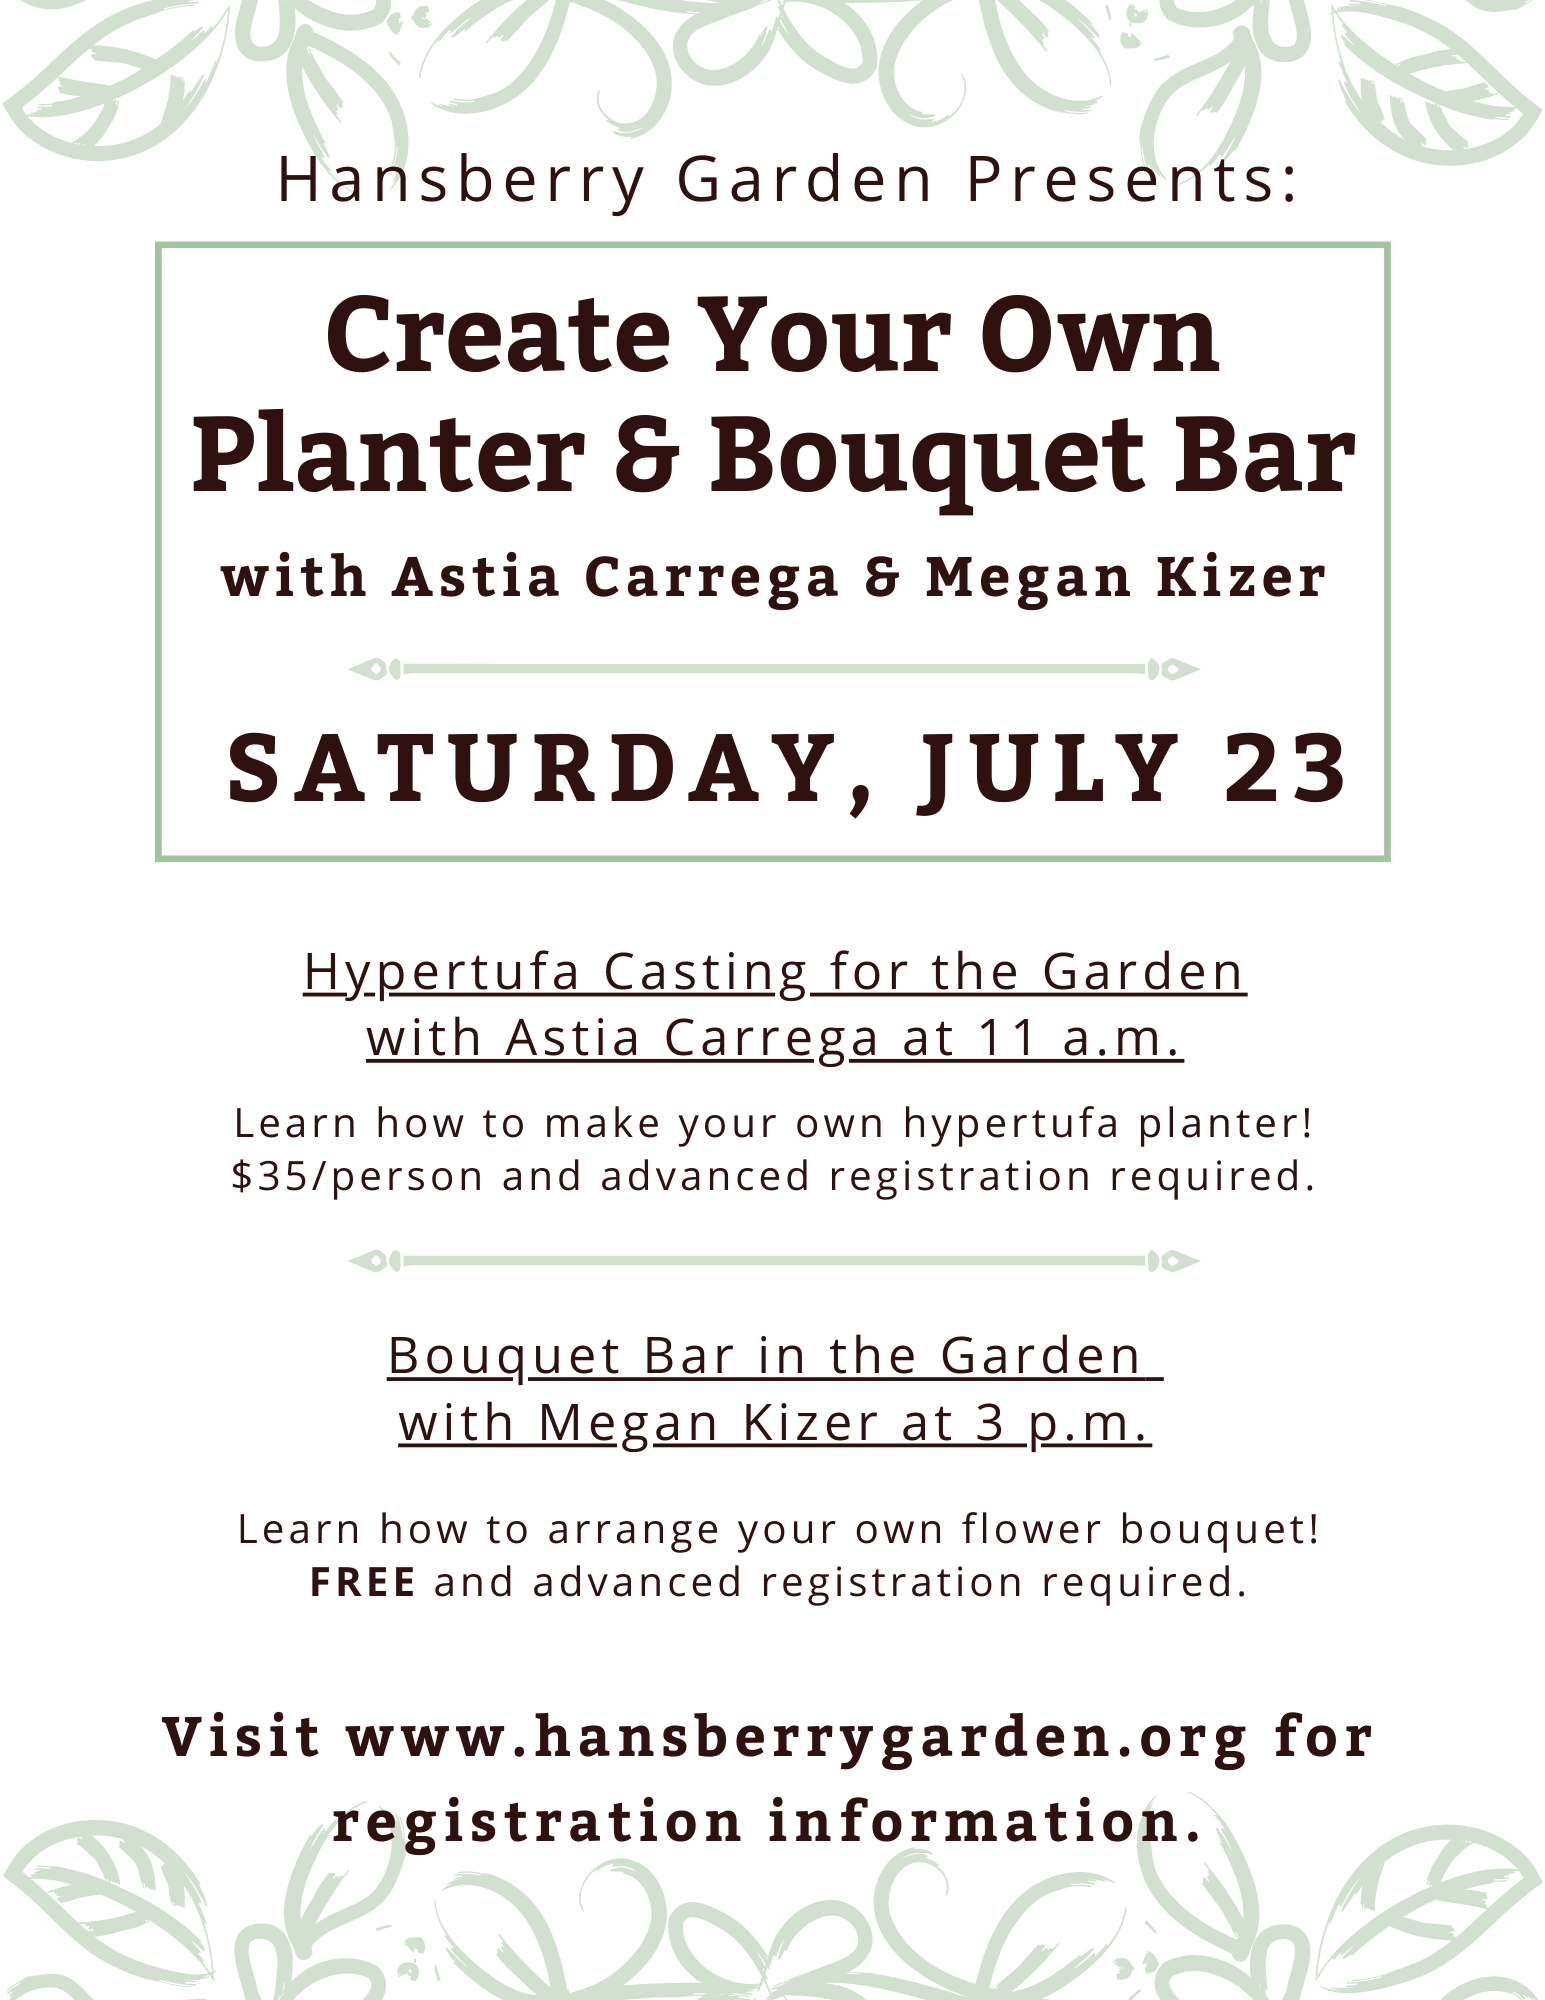 Create Your Own Planter & Bouquet Bar